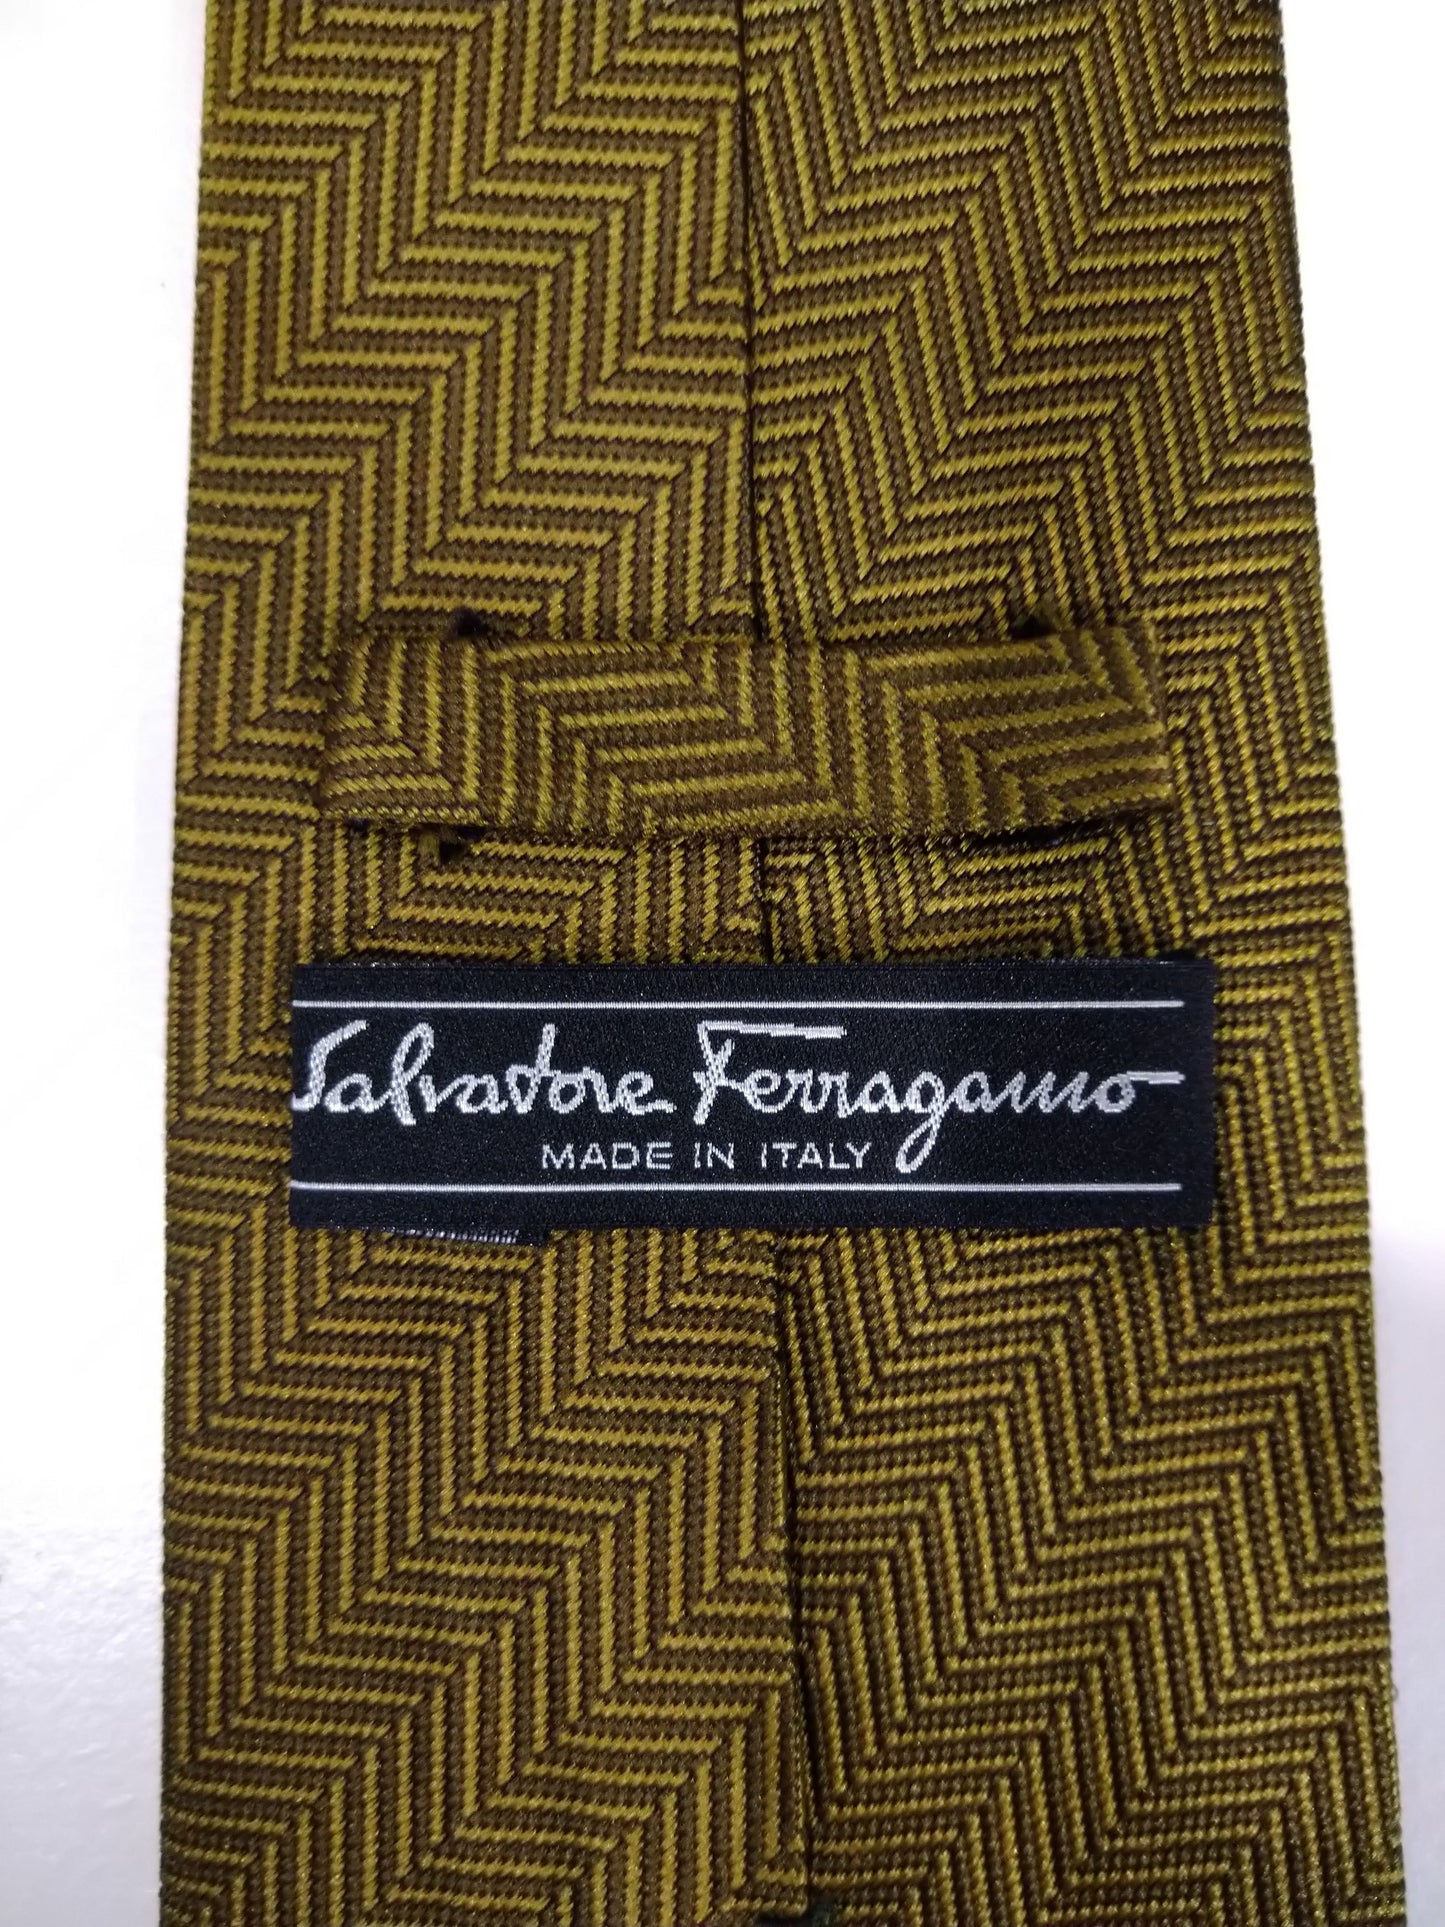 Salvatore Ferragamo Silk Tie. Motivo amarillo / dorado